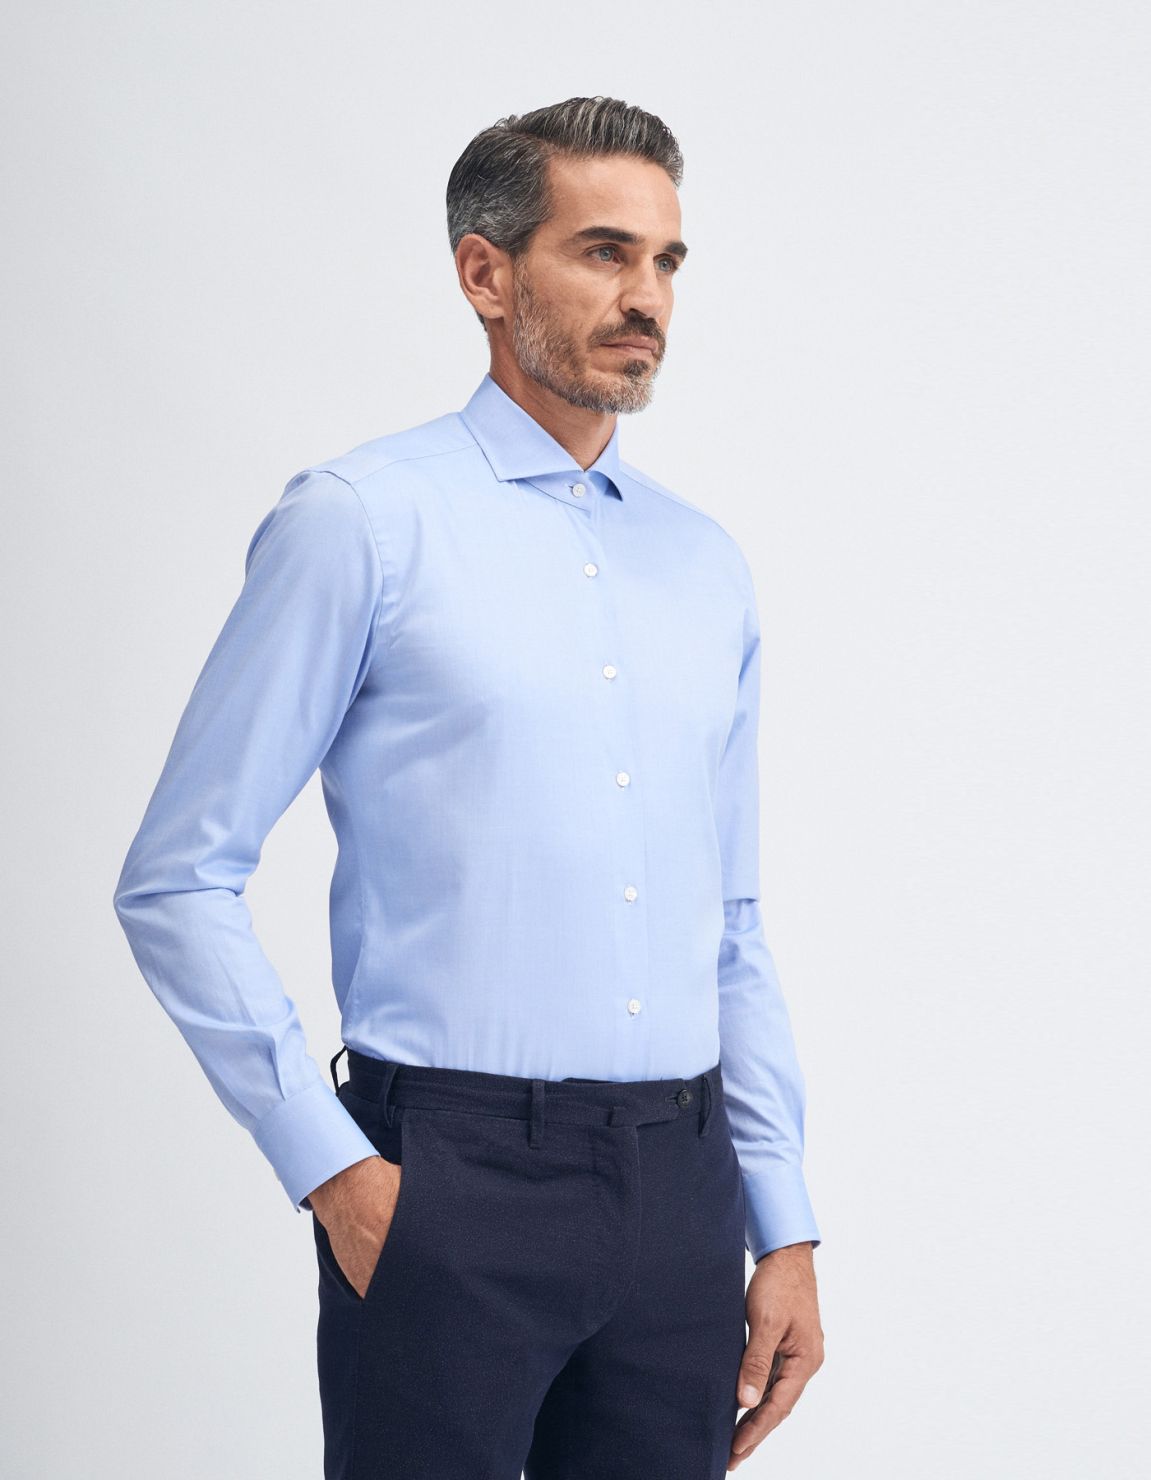 Shirt Collar cutaway Light Blue Oxford Tailor Custom Fit 1